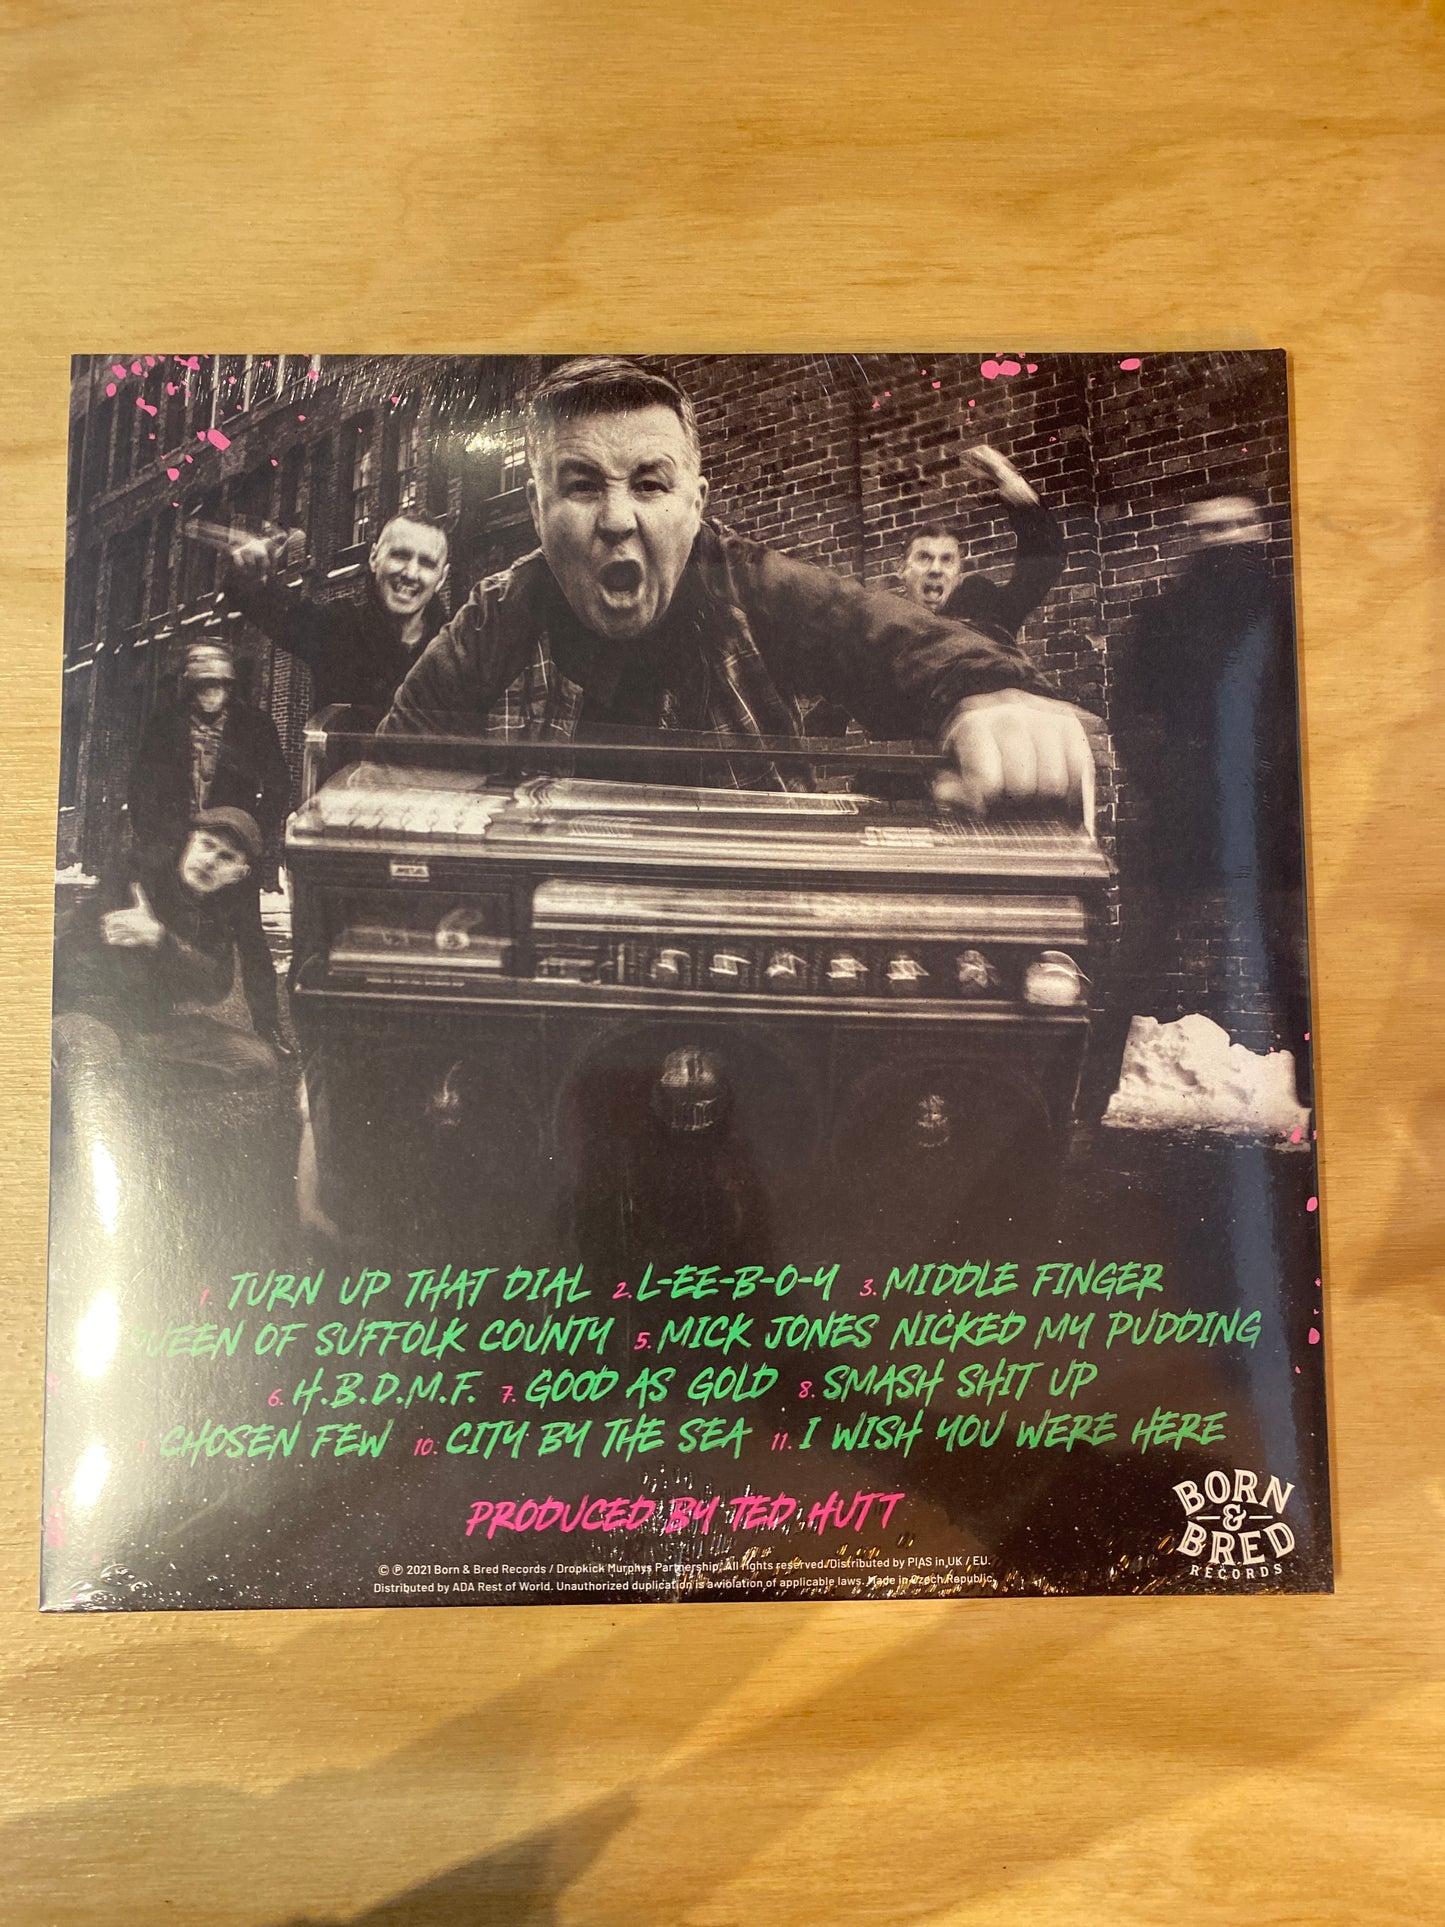 Dropkick Murphy's - Turn up that dial - Vinyl LP